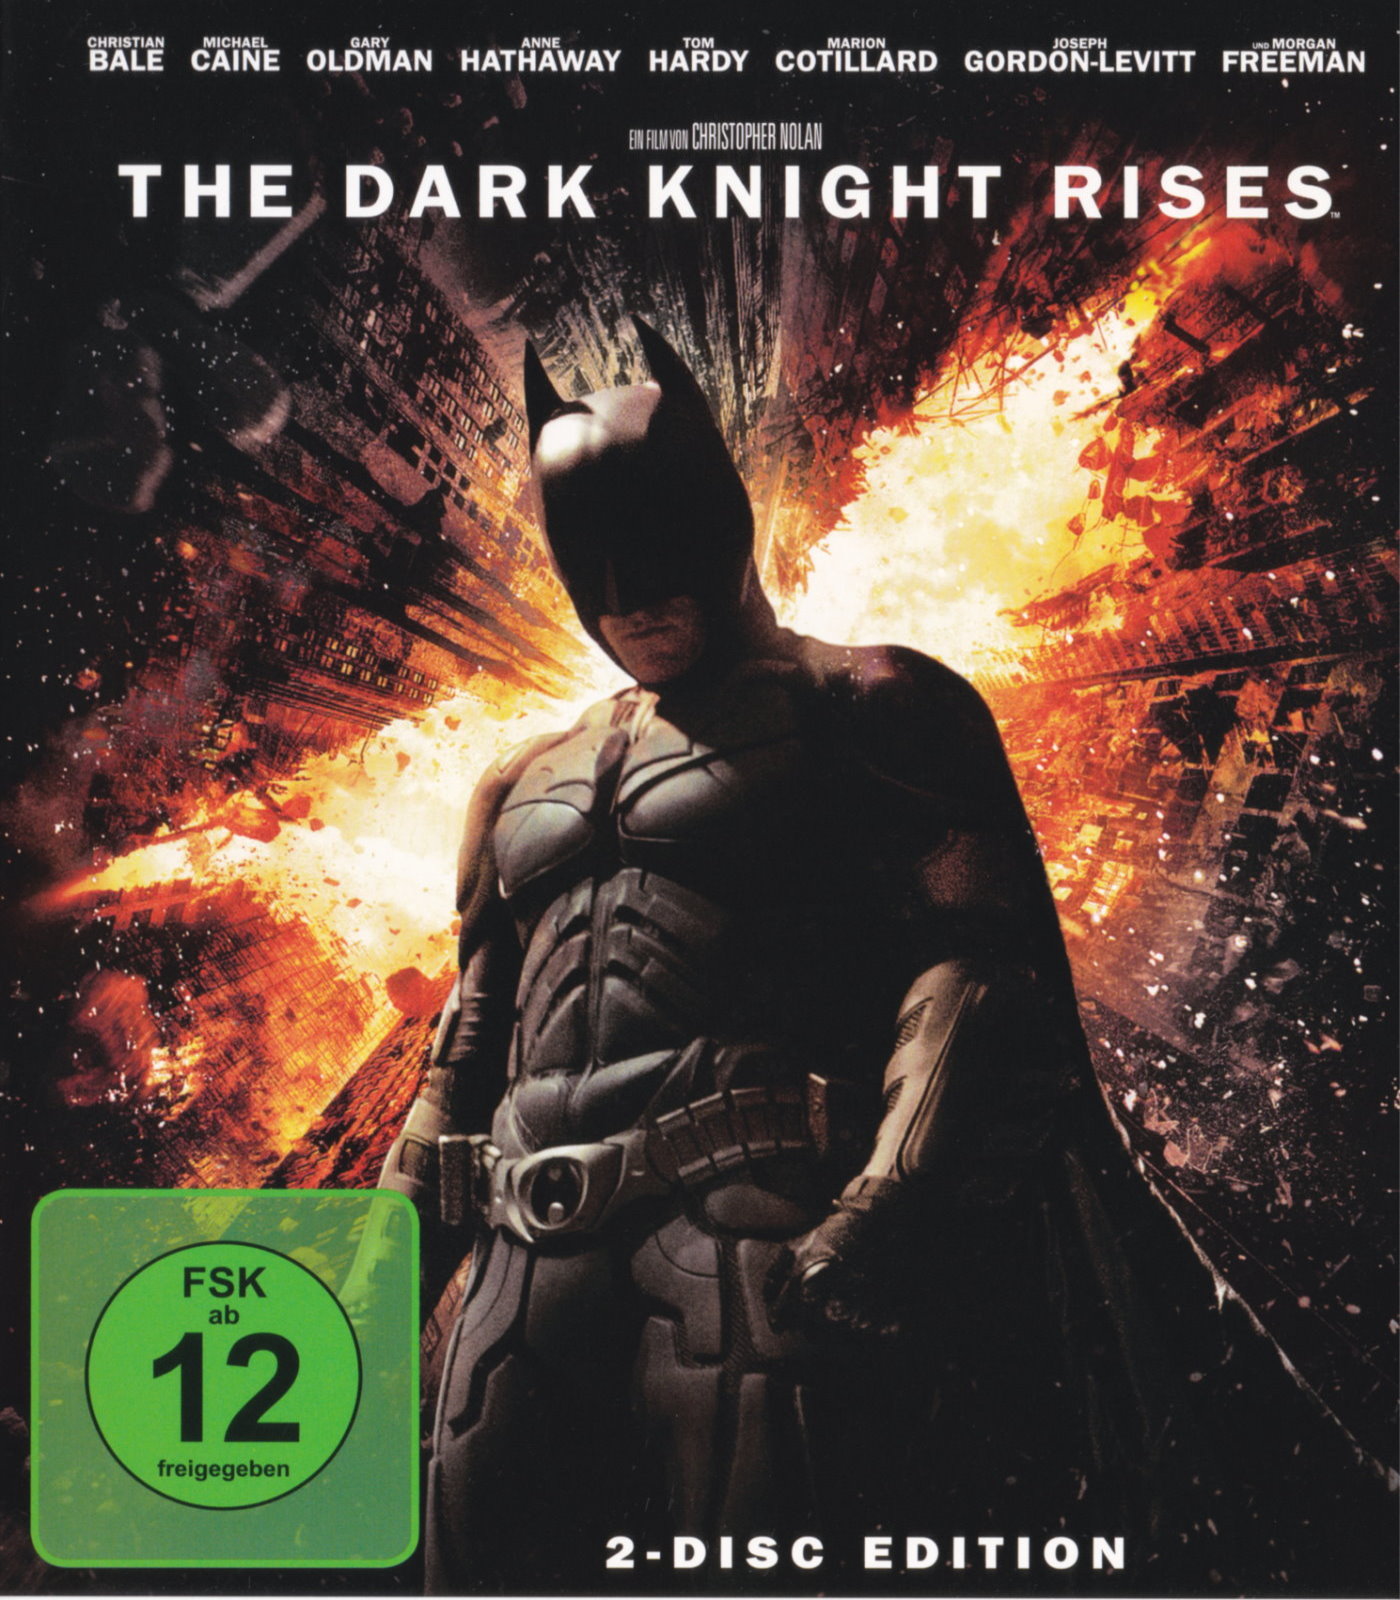 Cover - The Dark Knight Rises.jpg